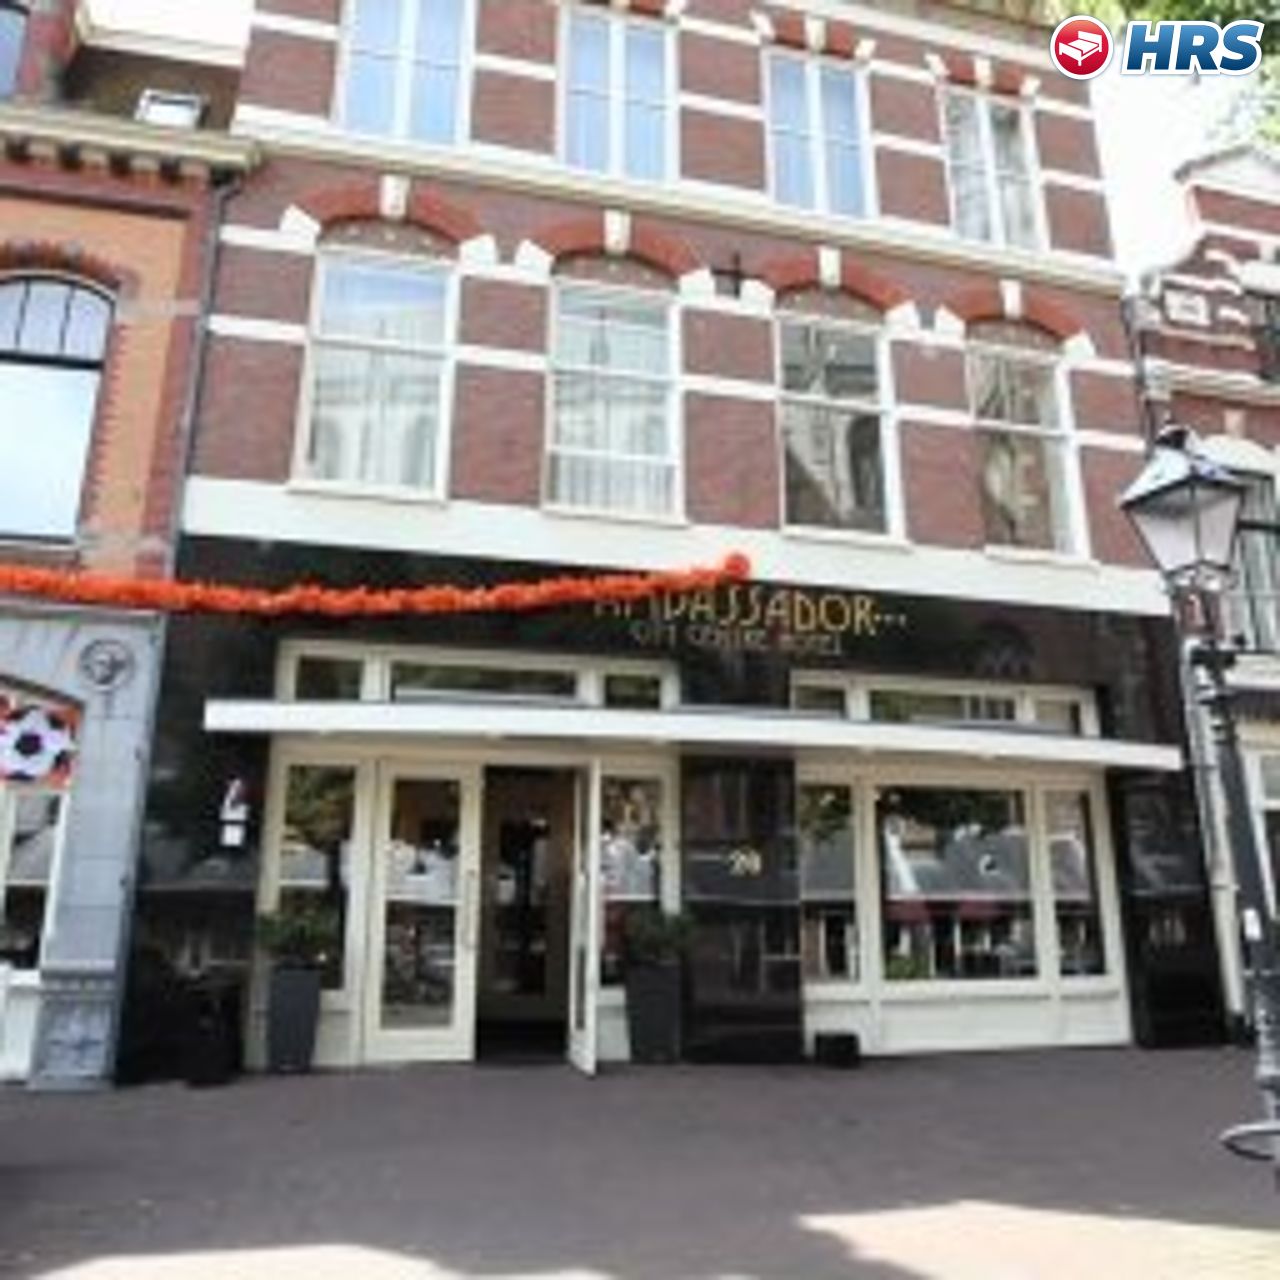 Joops City Centre Hotel - Haarlem - HOTEL INFO